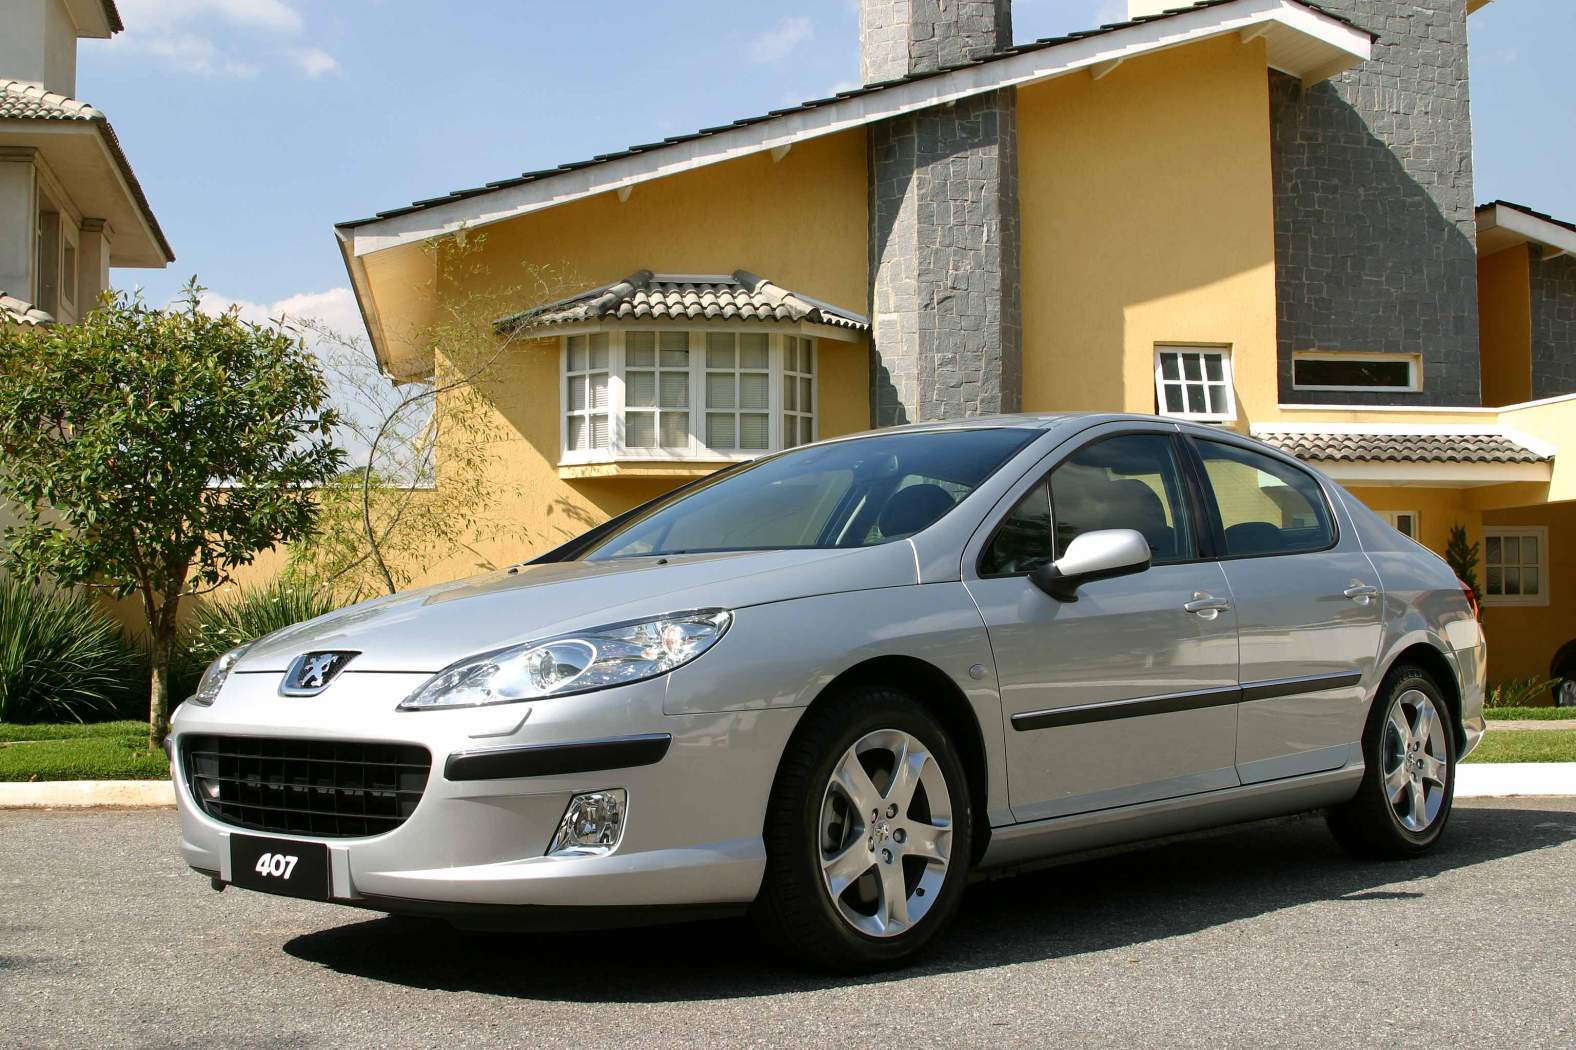 Пежо 407 купить бу. Peugeot 407. Peugeot 407 2004. Пежо 407 седан. Peugeot 407 (2004-2011).